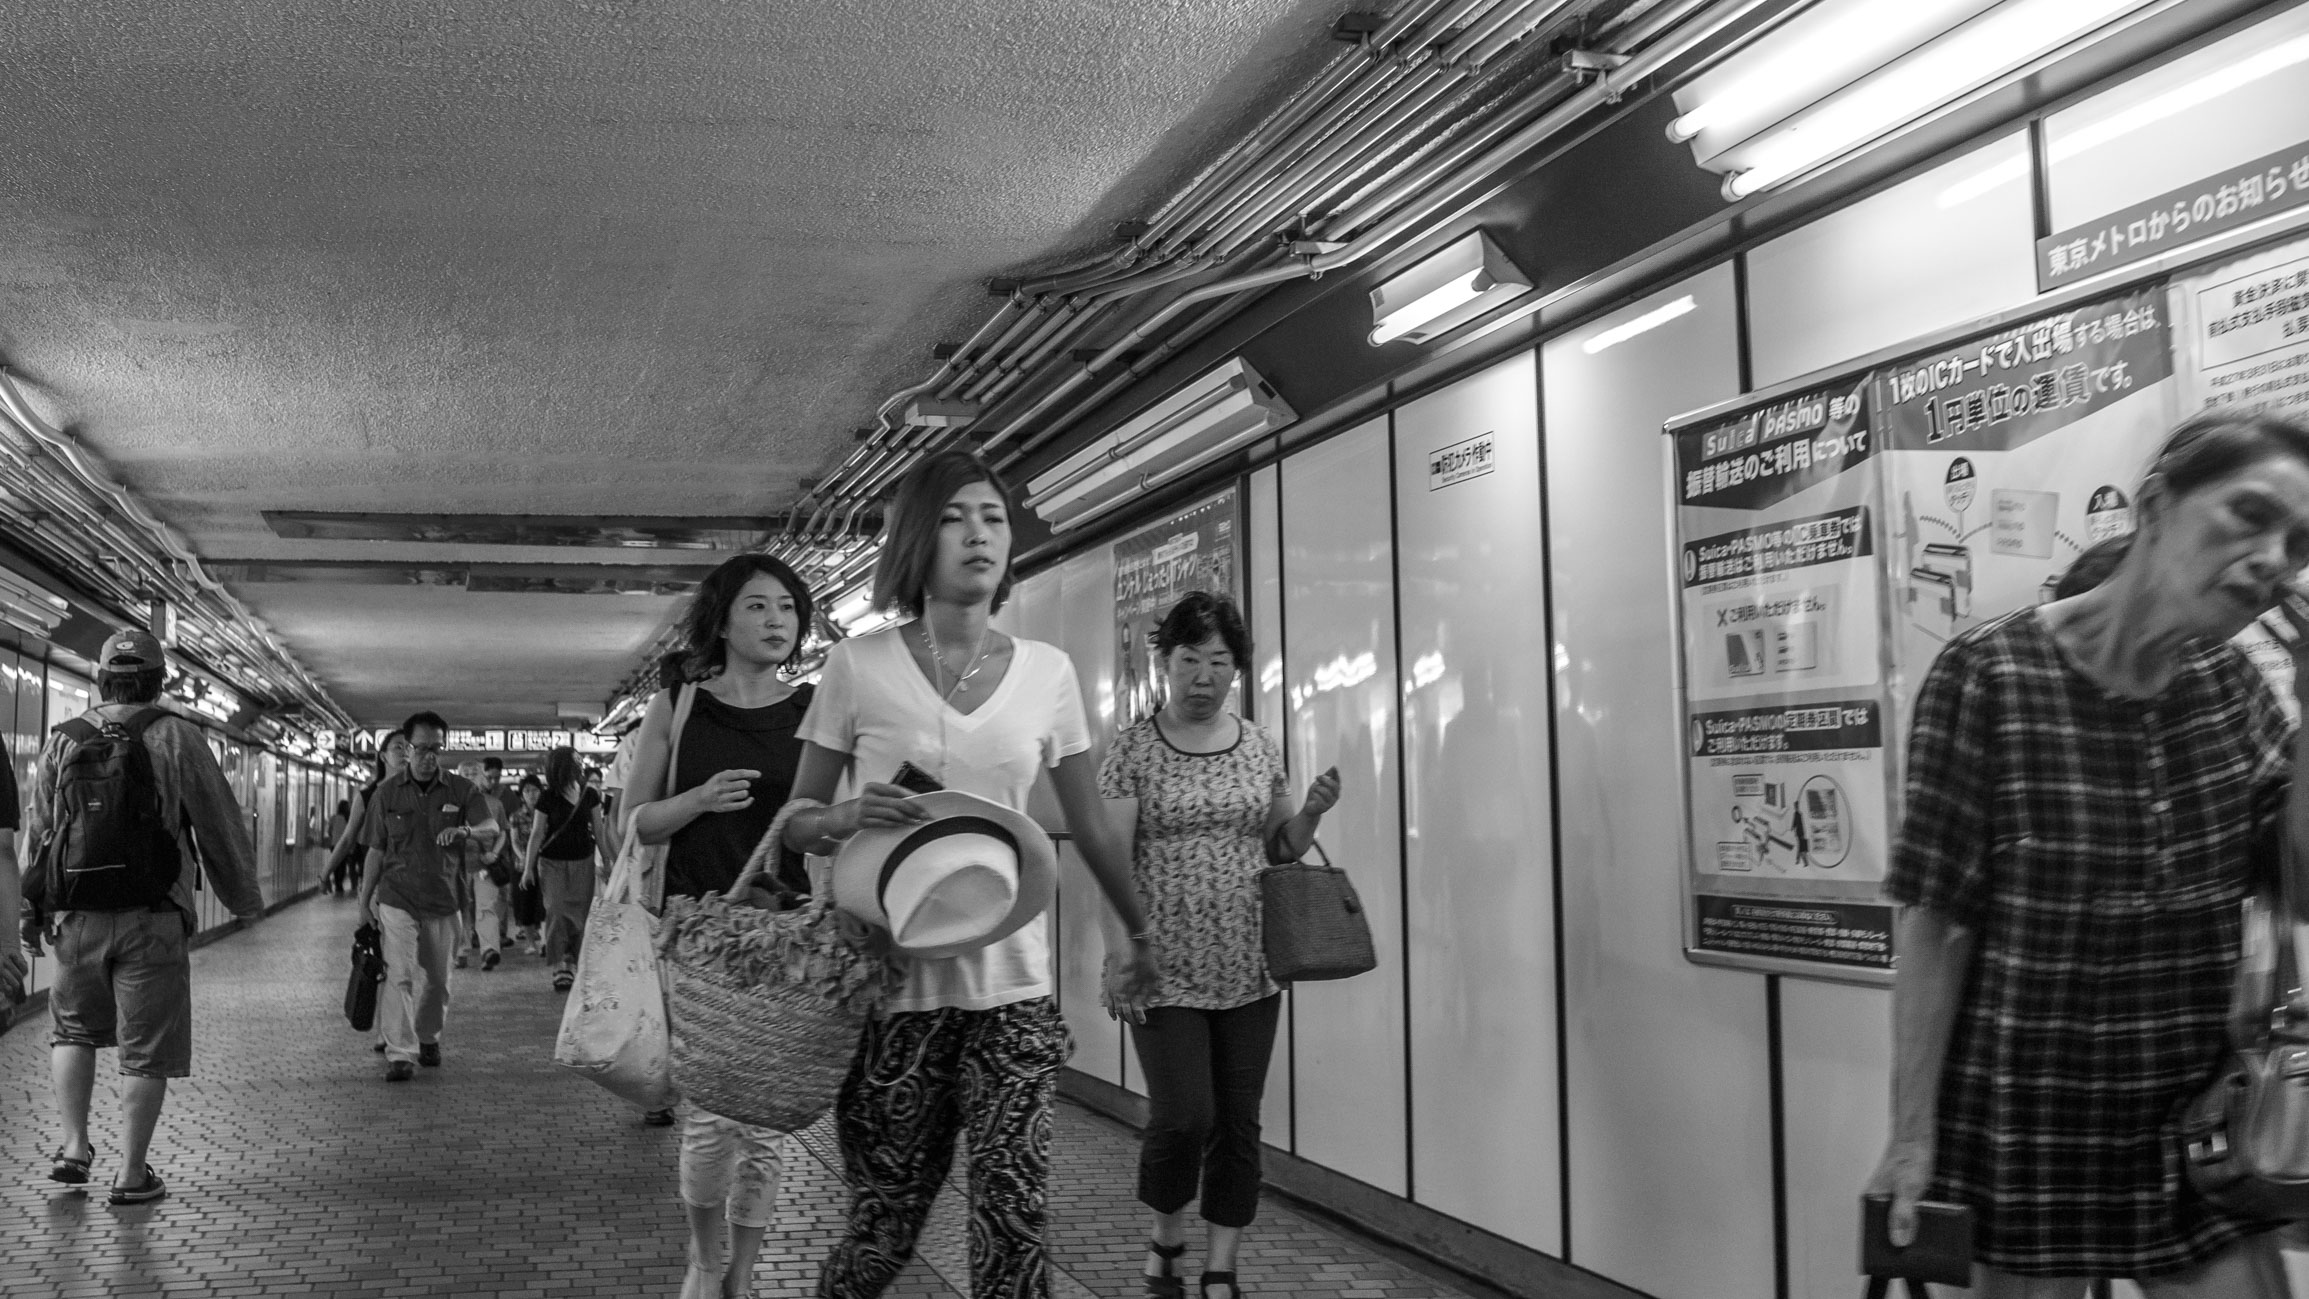 /Guewen/galeries/public/Voyages/Japon/Tokyo/Ueno/metro/Ueno_081.jpg